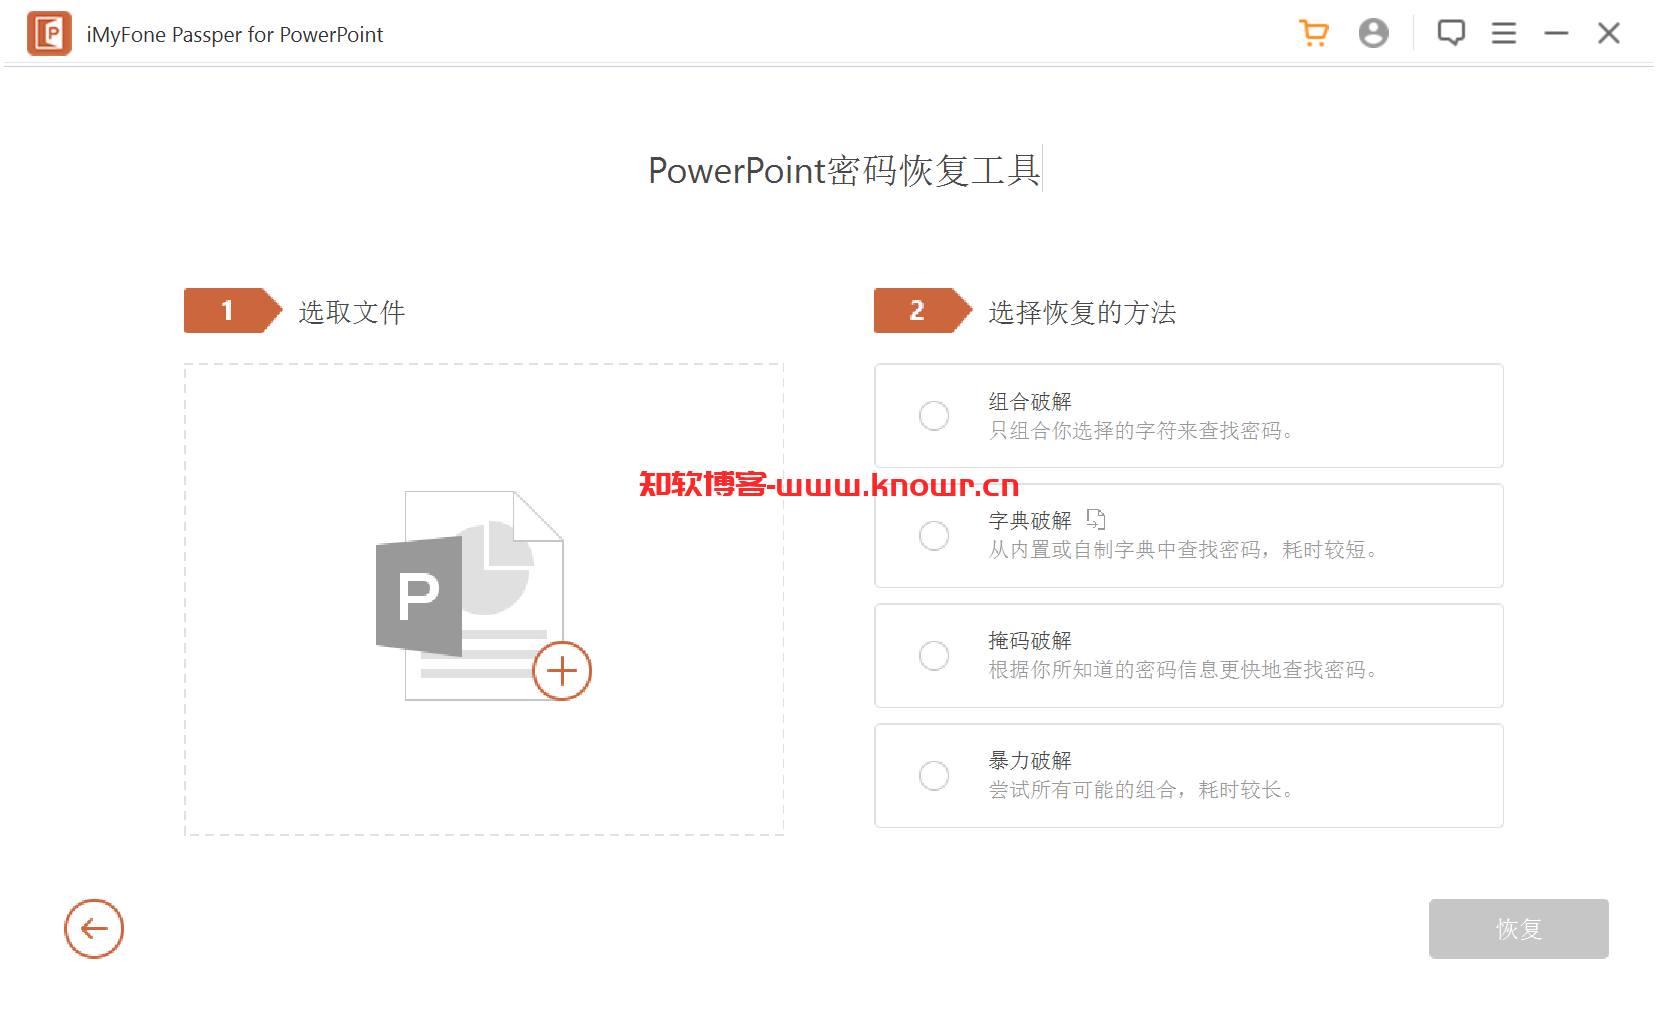 PPT文稿解锁 Passper for PowerPoint v3.9.3.1 中文破解版